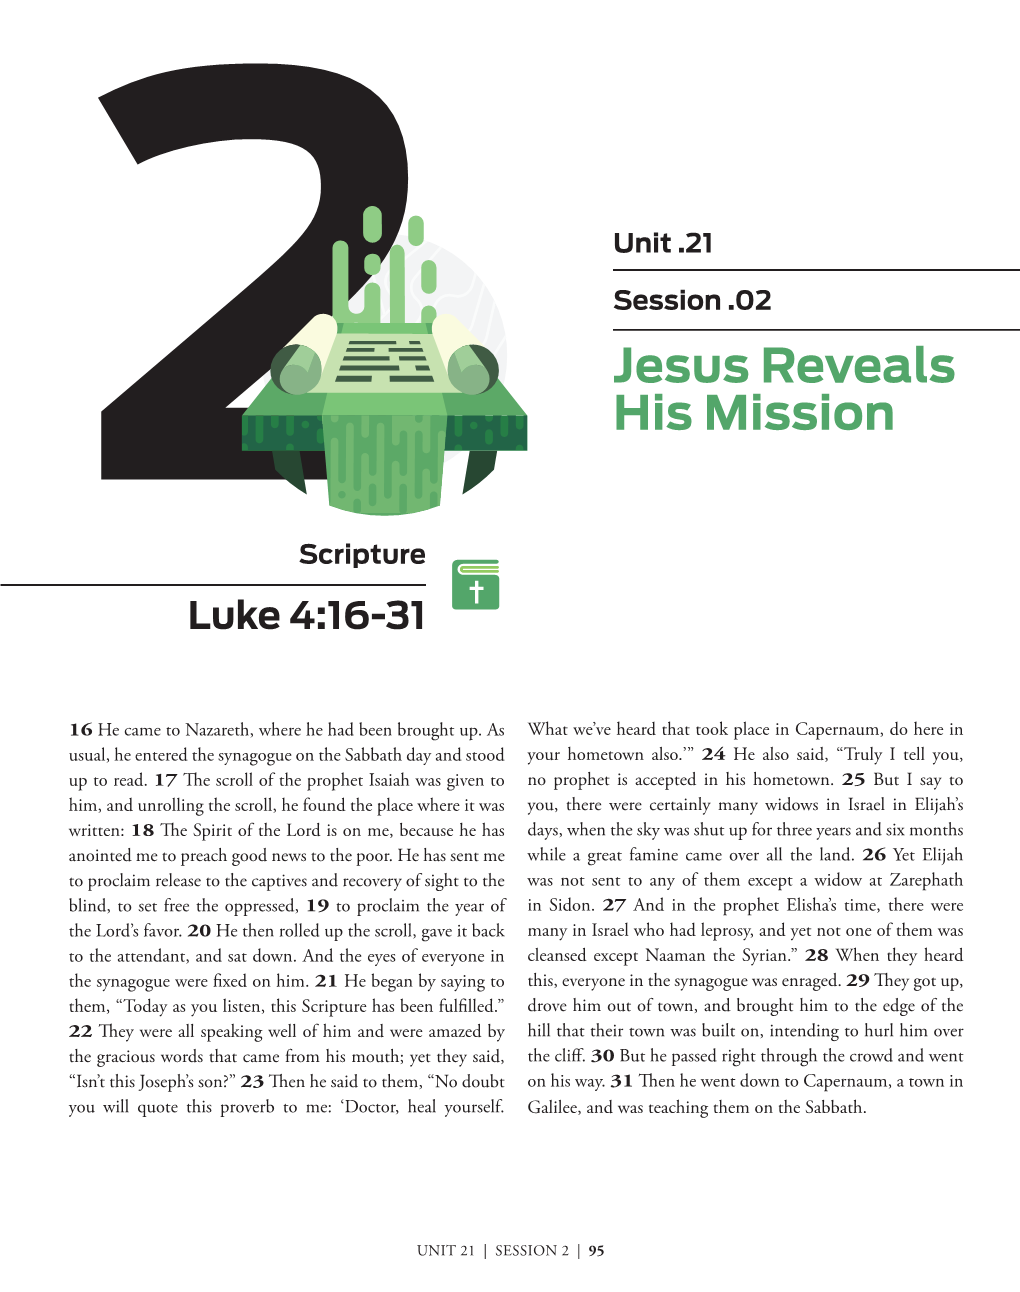 Jesus Reveals His Mission